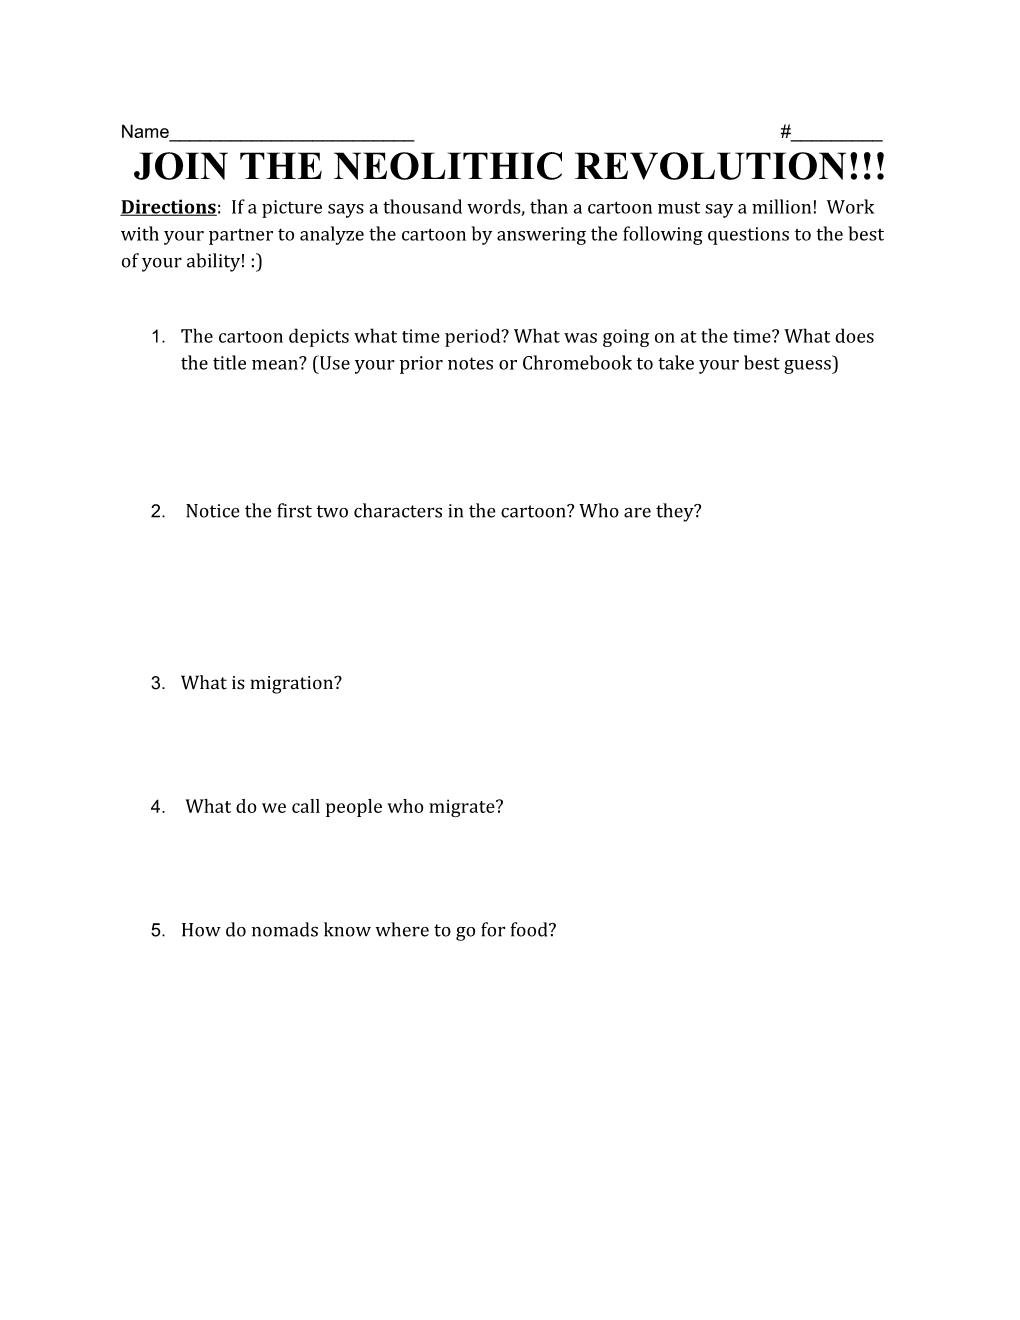 Join the Neolithic Revolution